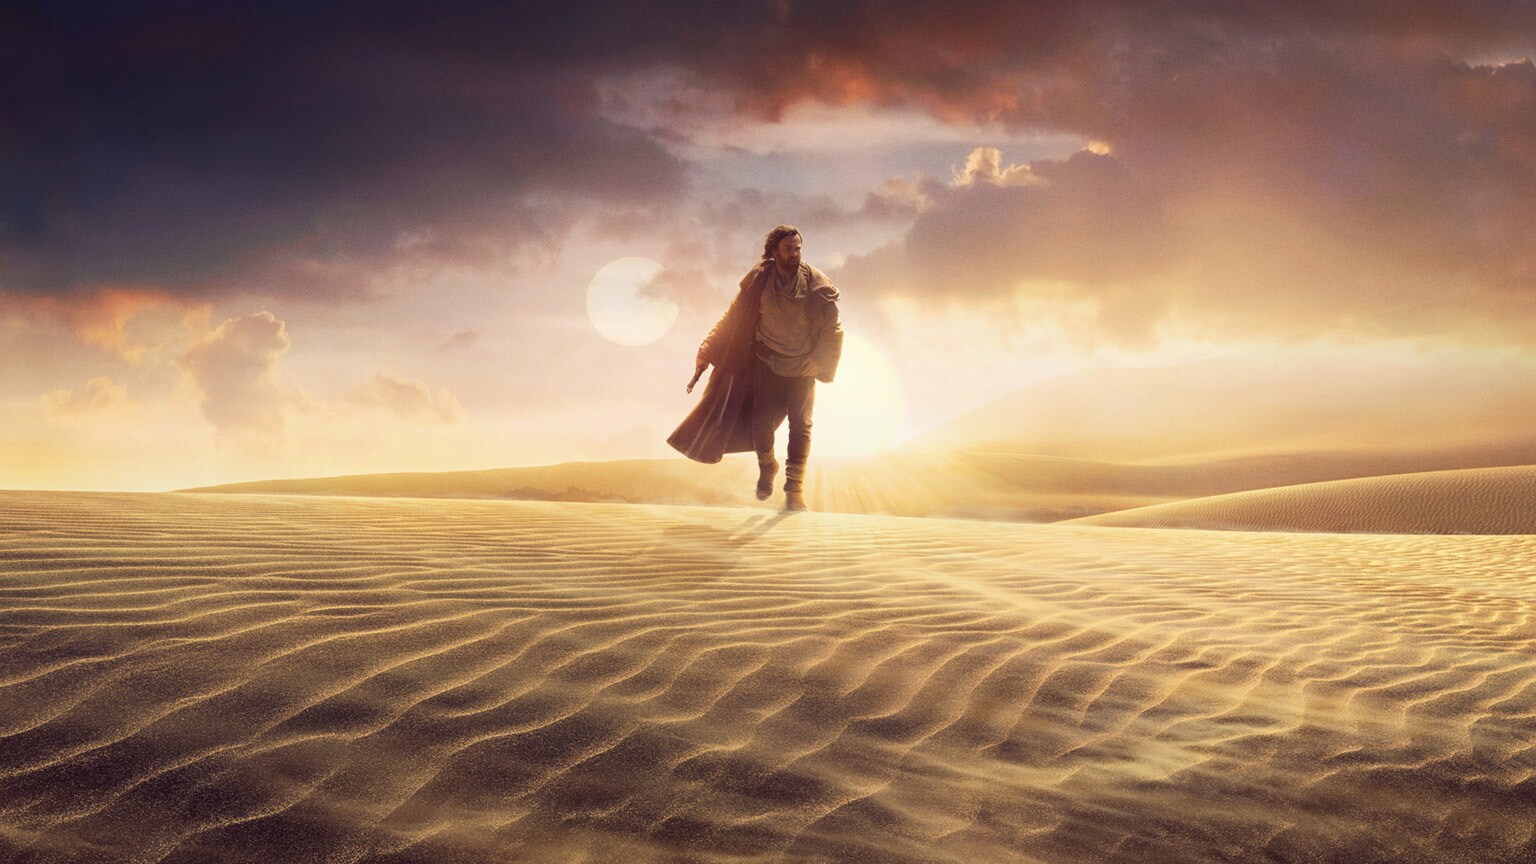 Obi-Wan Kenobi to Premiere May 27 with Two Episodes